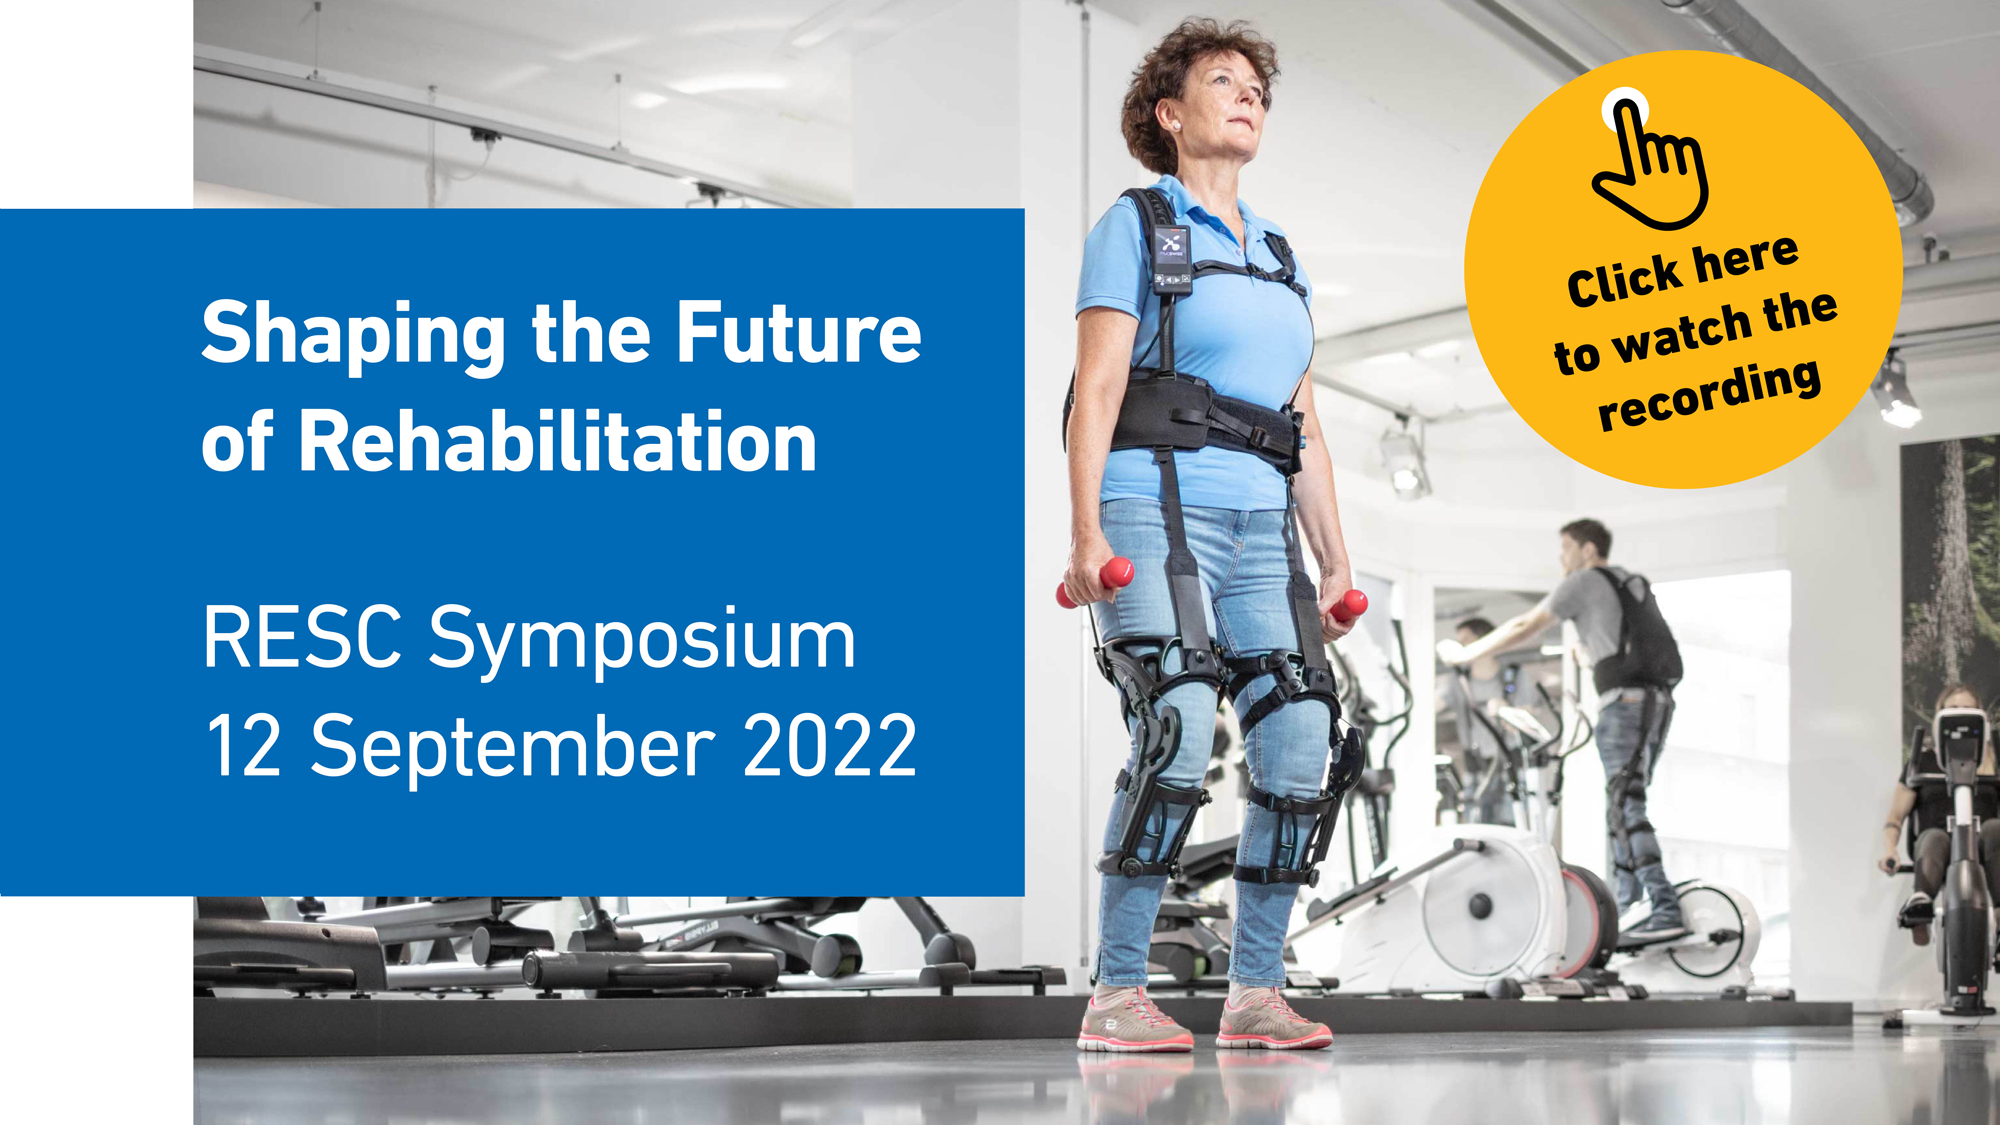 teaser for RESC Symposium 2022 shows woman during rehabilitation